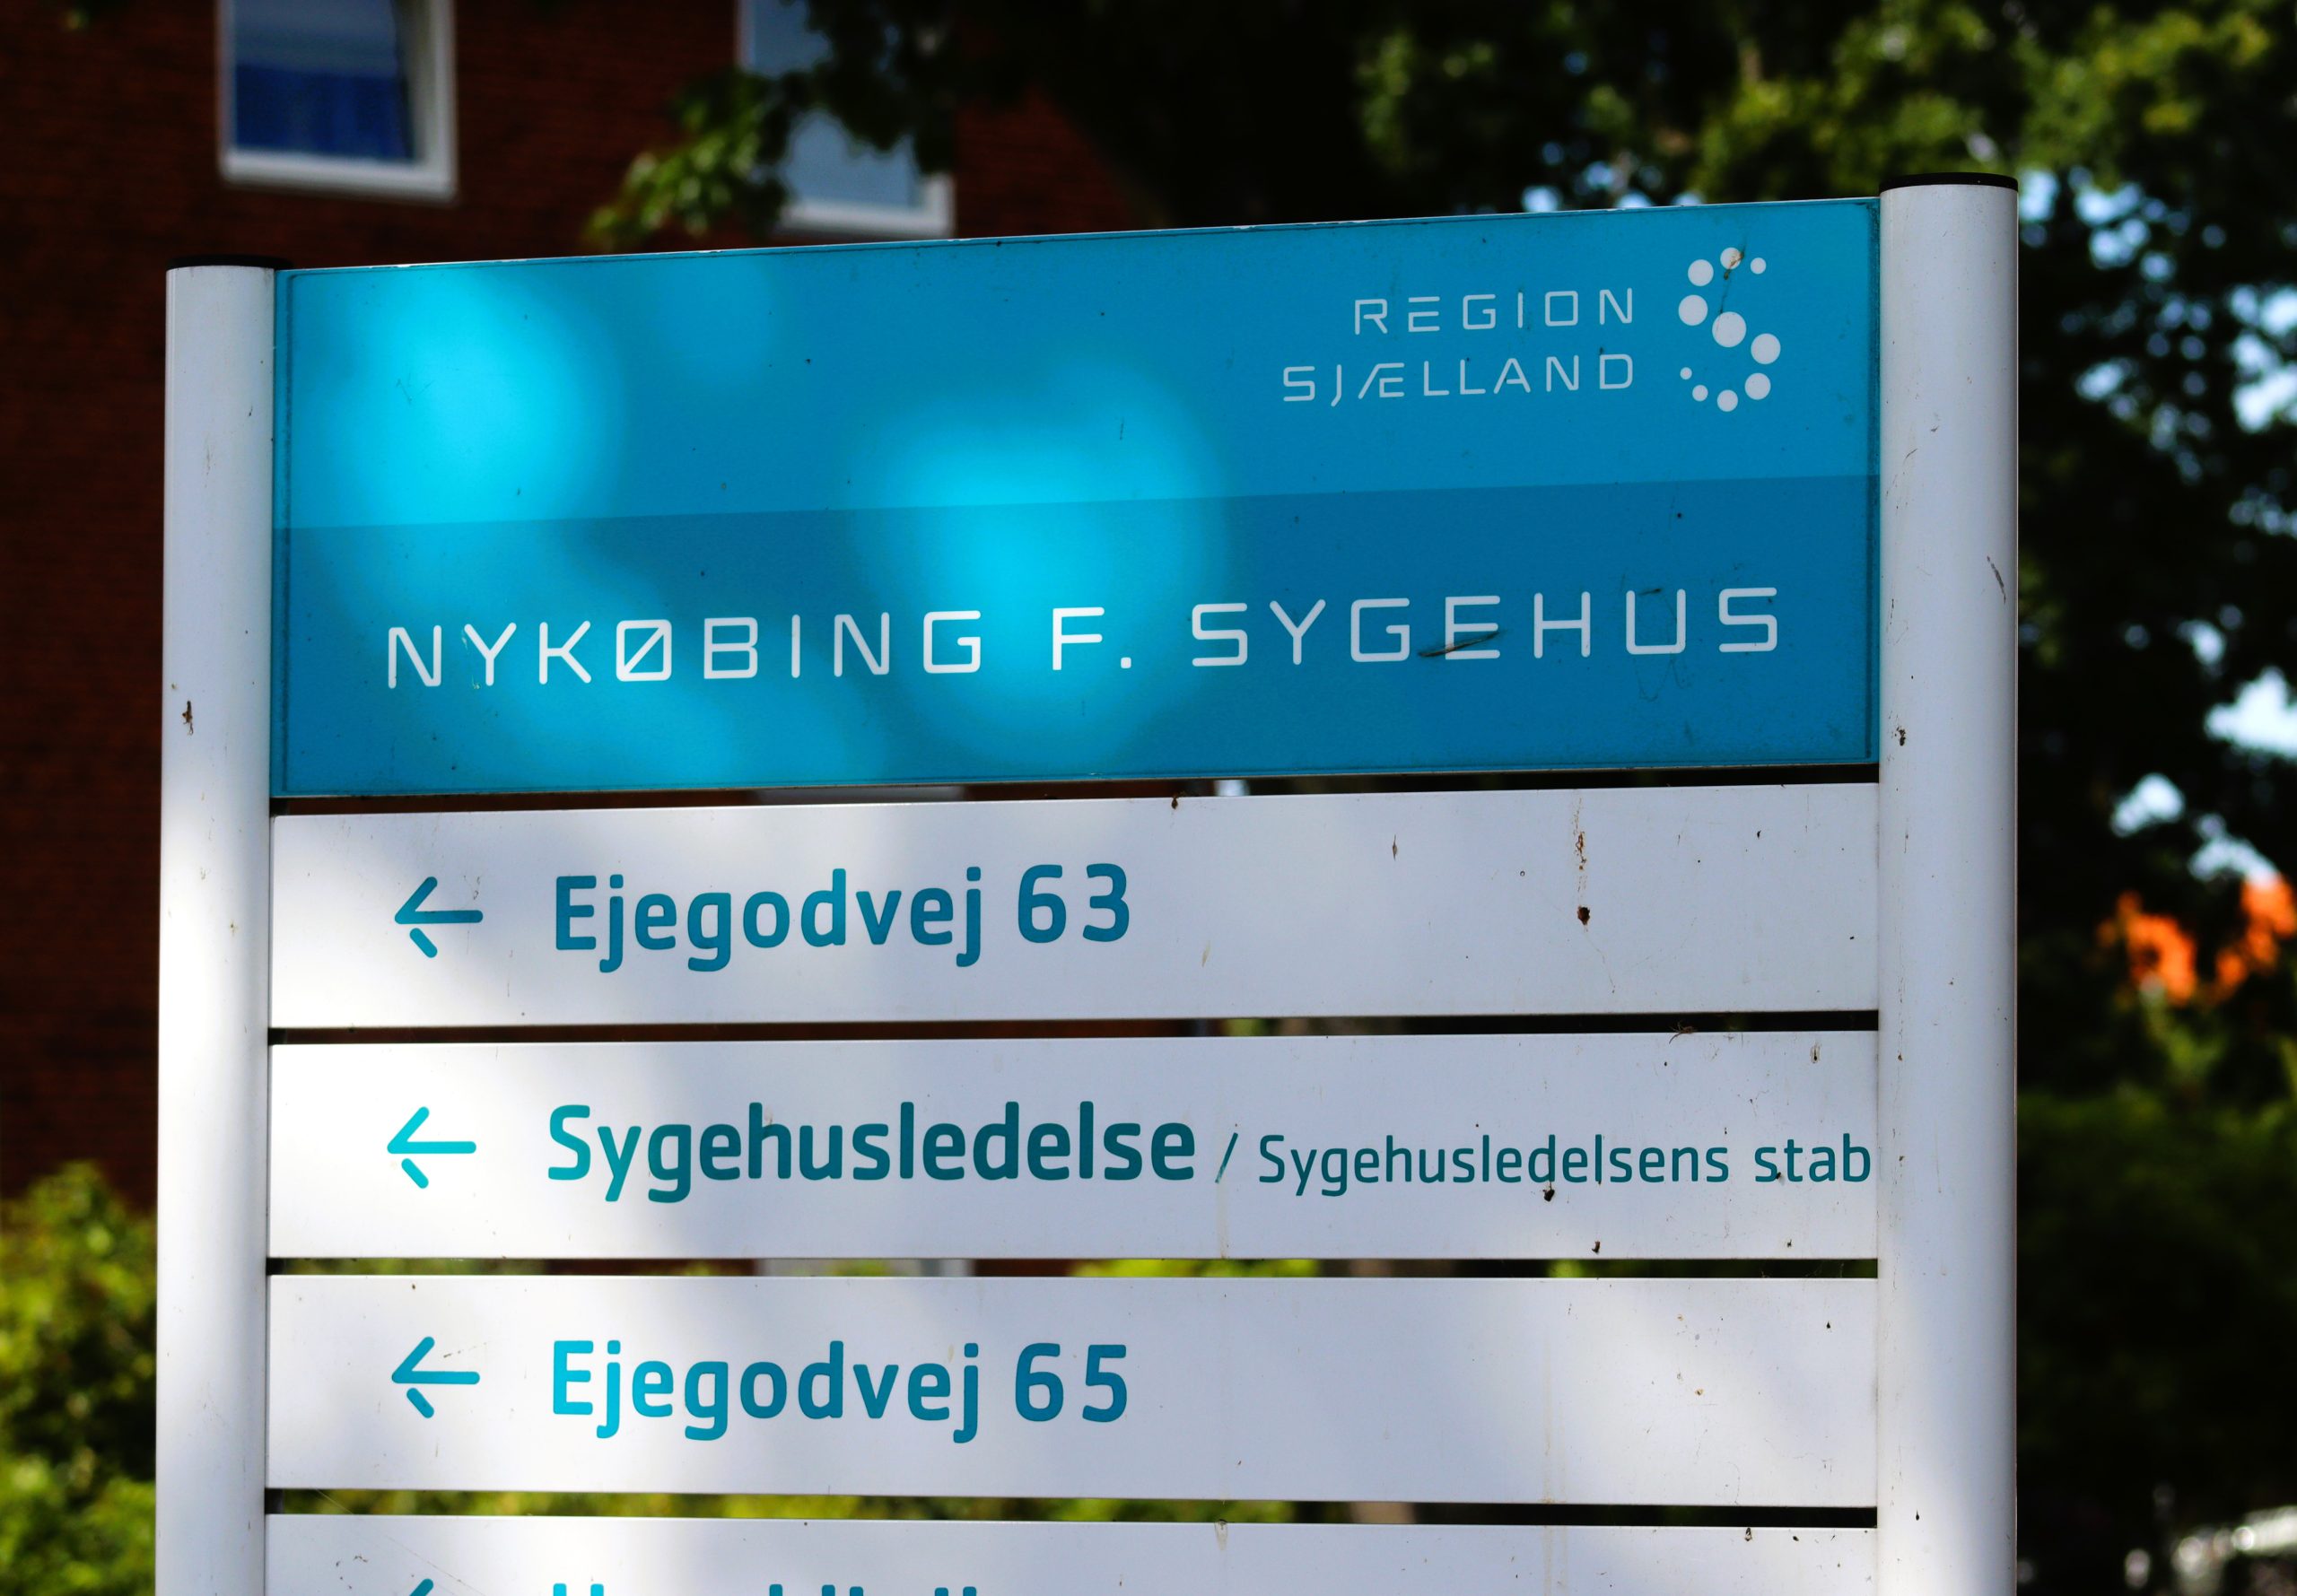 Ny retning for akutsygehusene i Region Sjælland